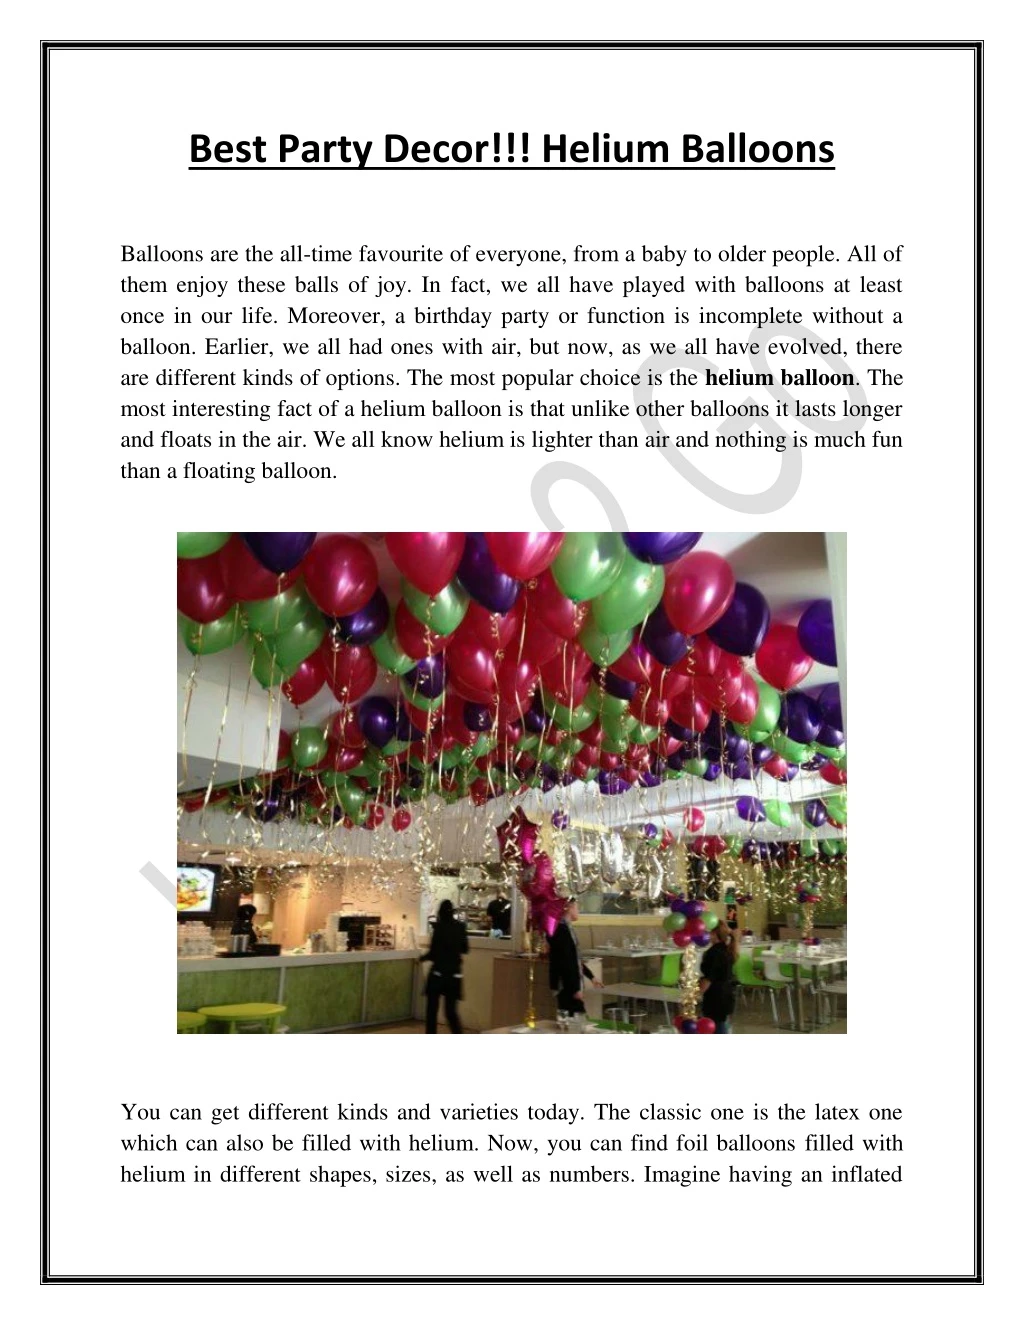 best party decor helium balloons